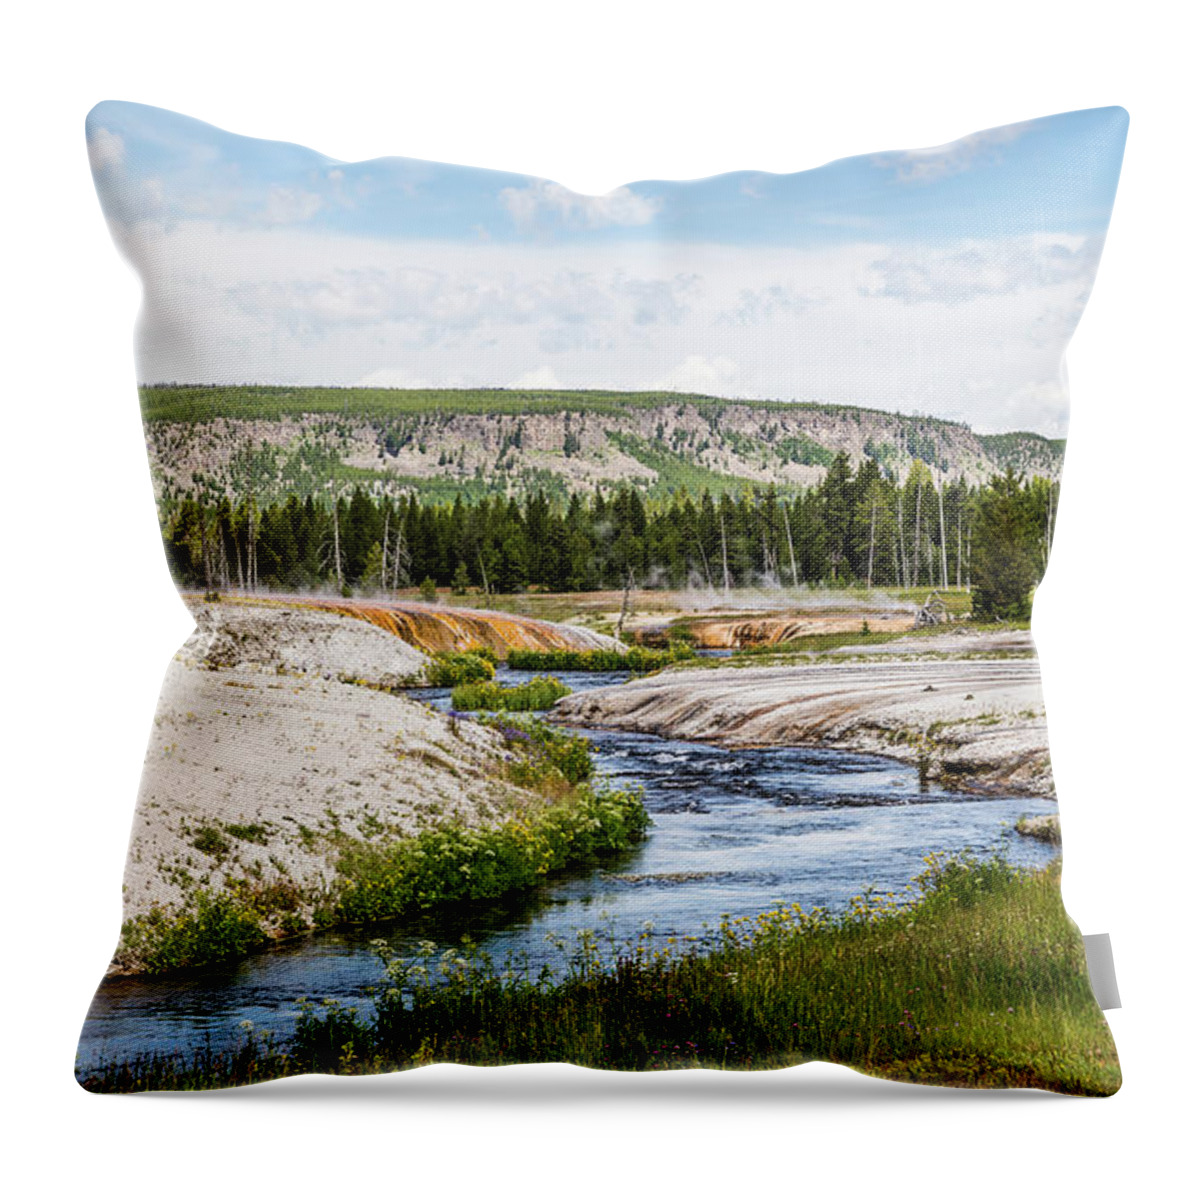  Yellow Stone National Park Throw Pillow featuring the photograph Yellowstone National Park 2 by Joe Granita